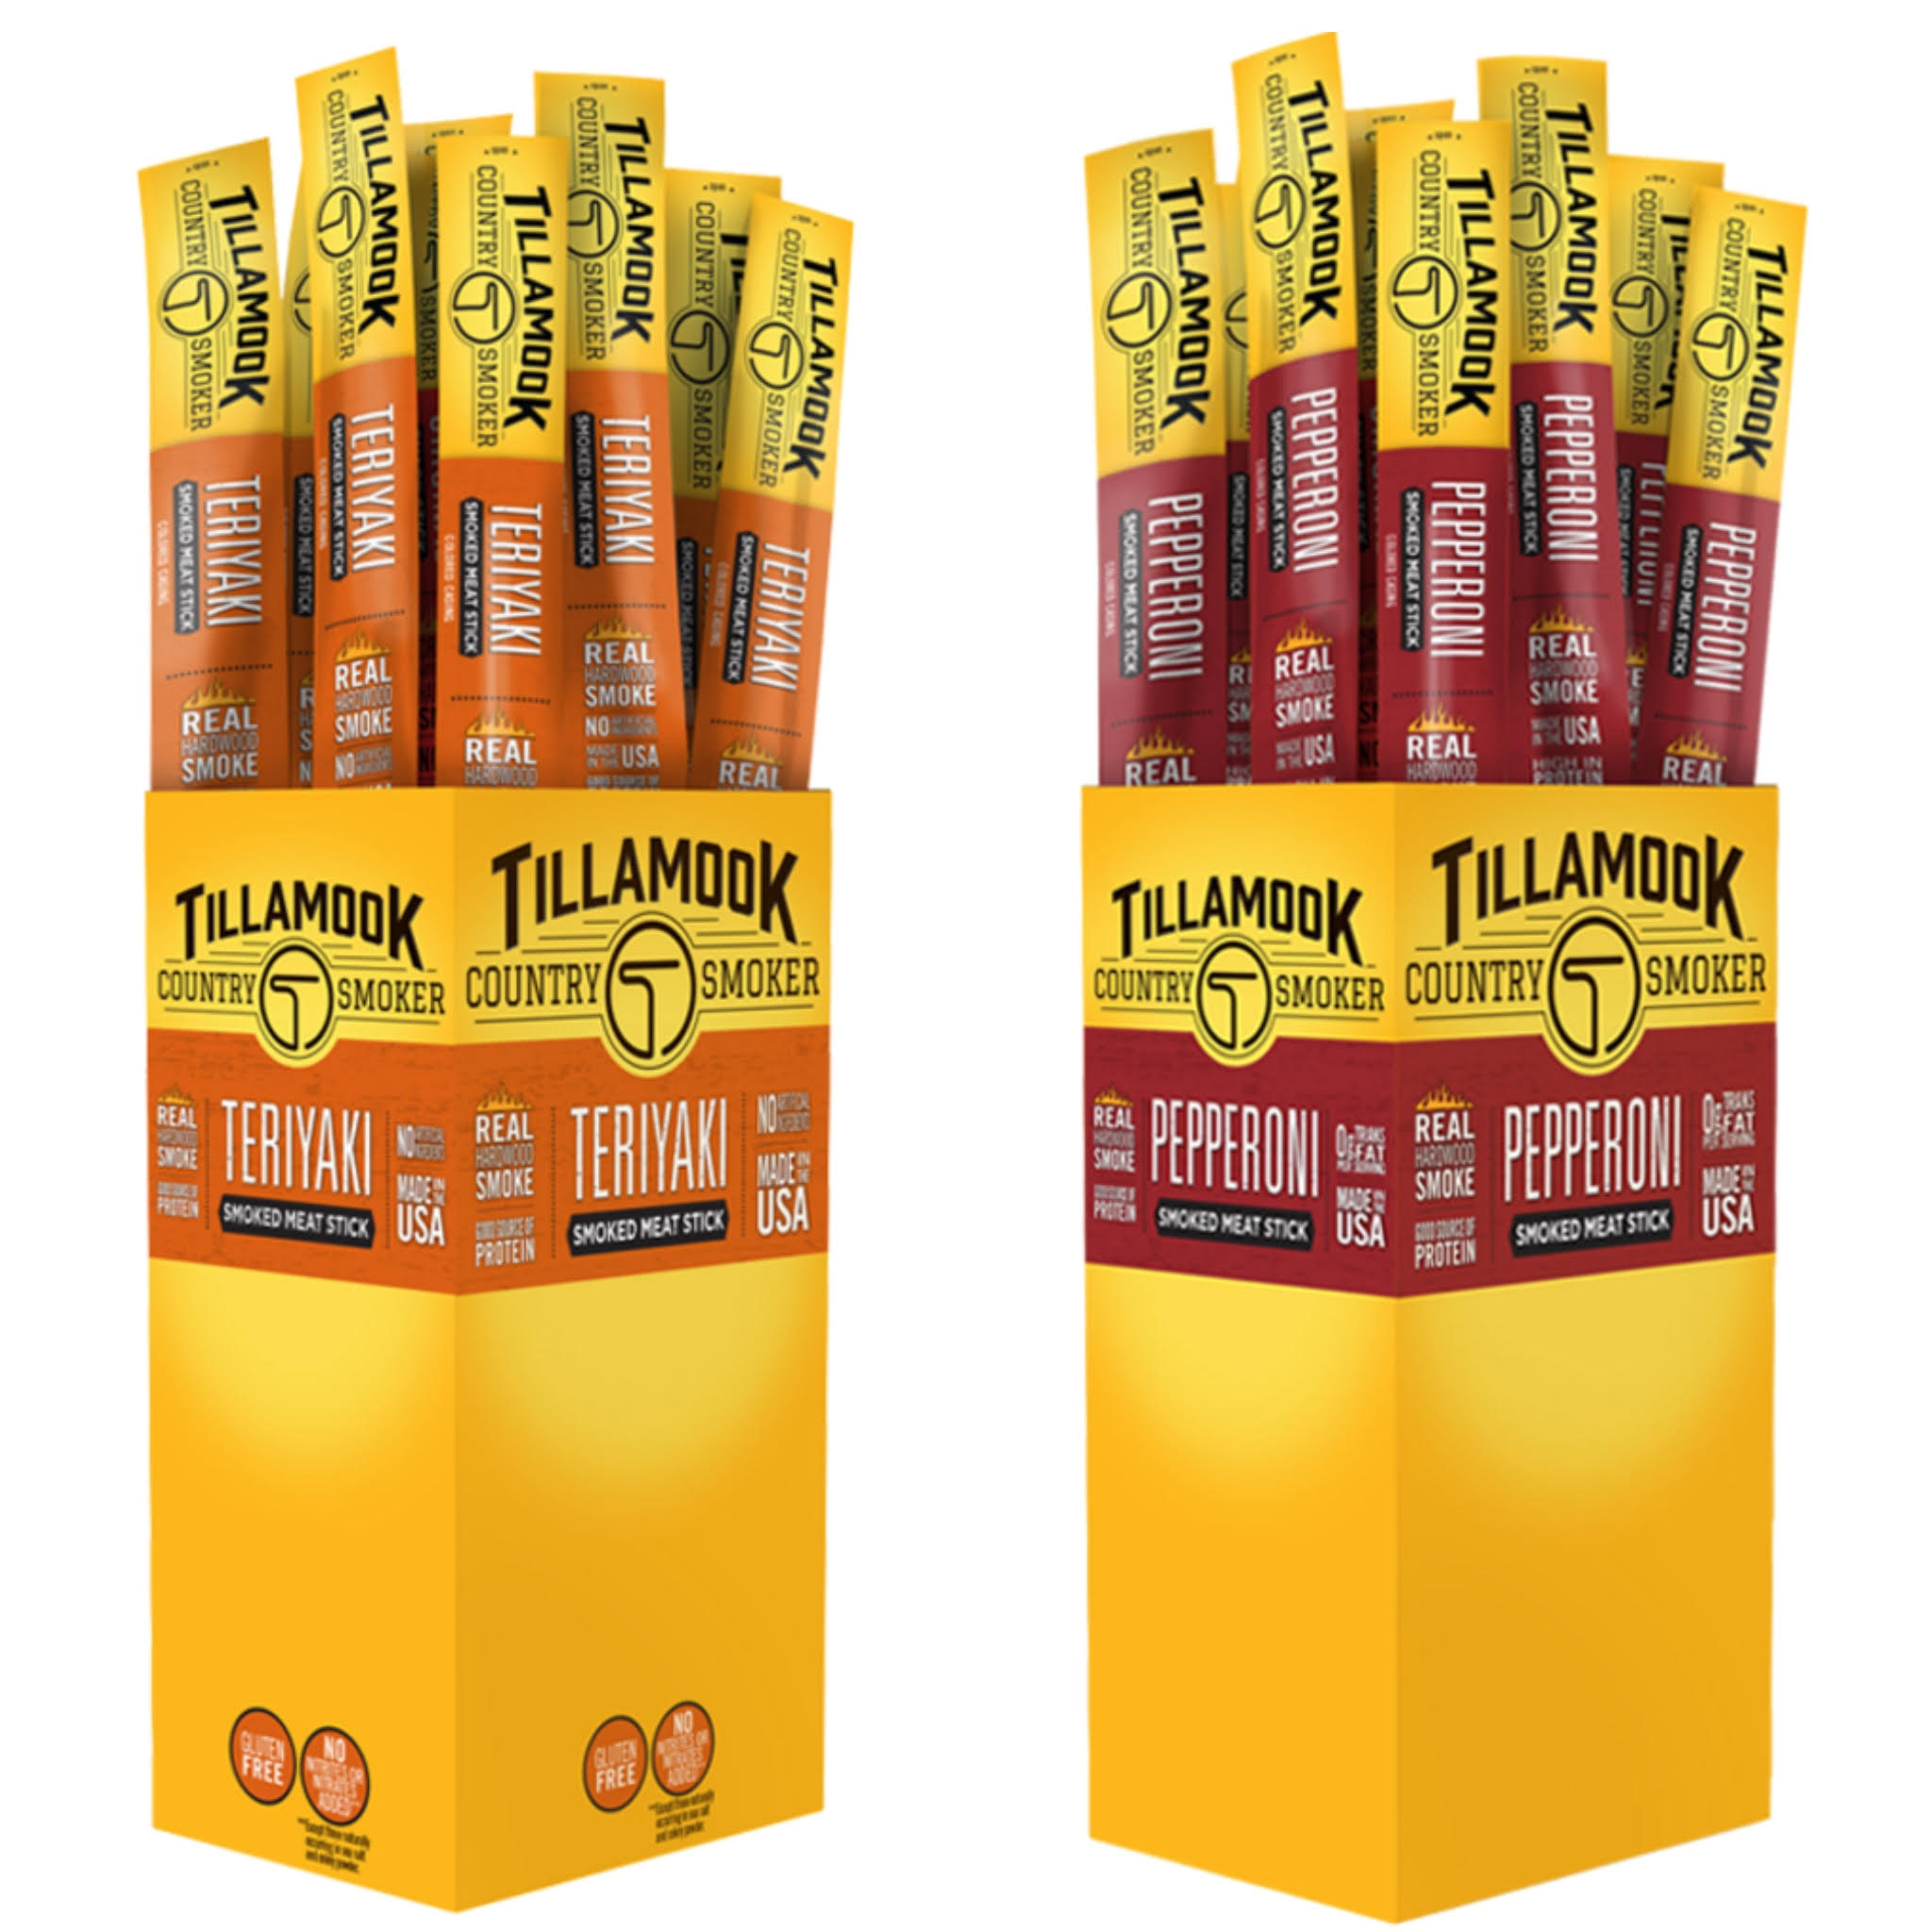 000-Tillamook Meat Sticks 10pcs Total 5pcs Pepperoni & 5pcs Teriyaki Flavor